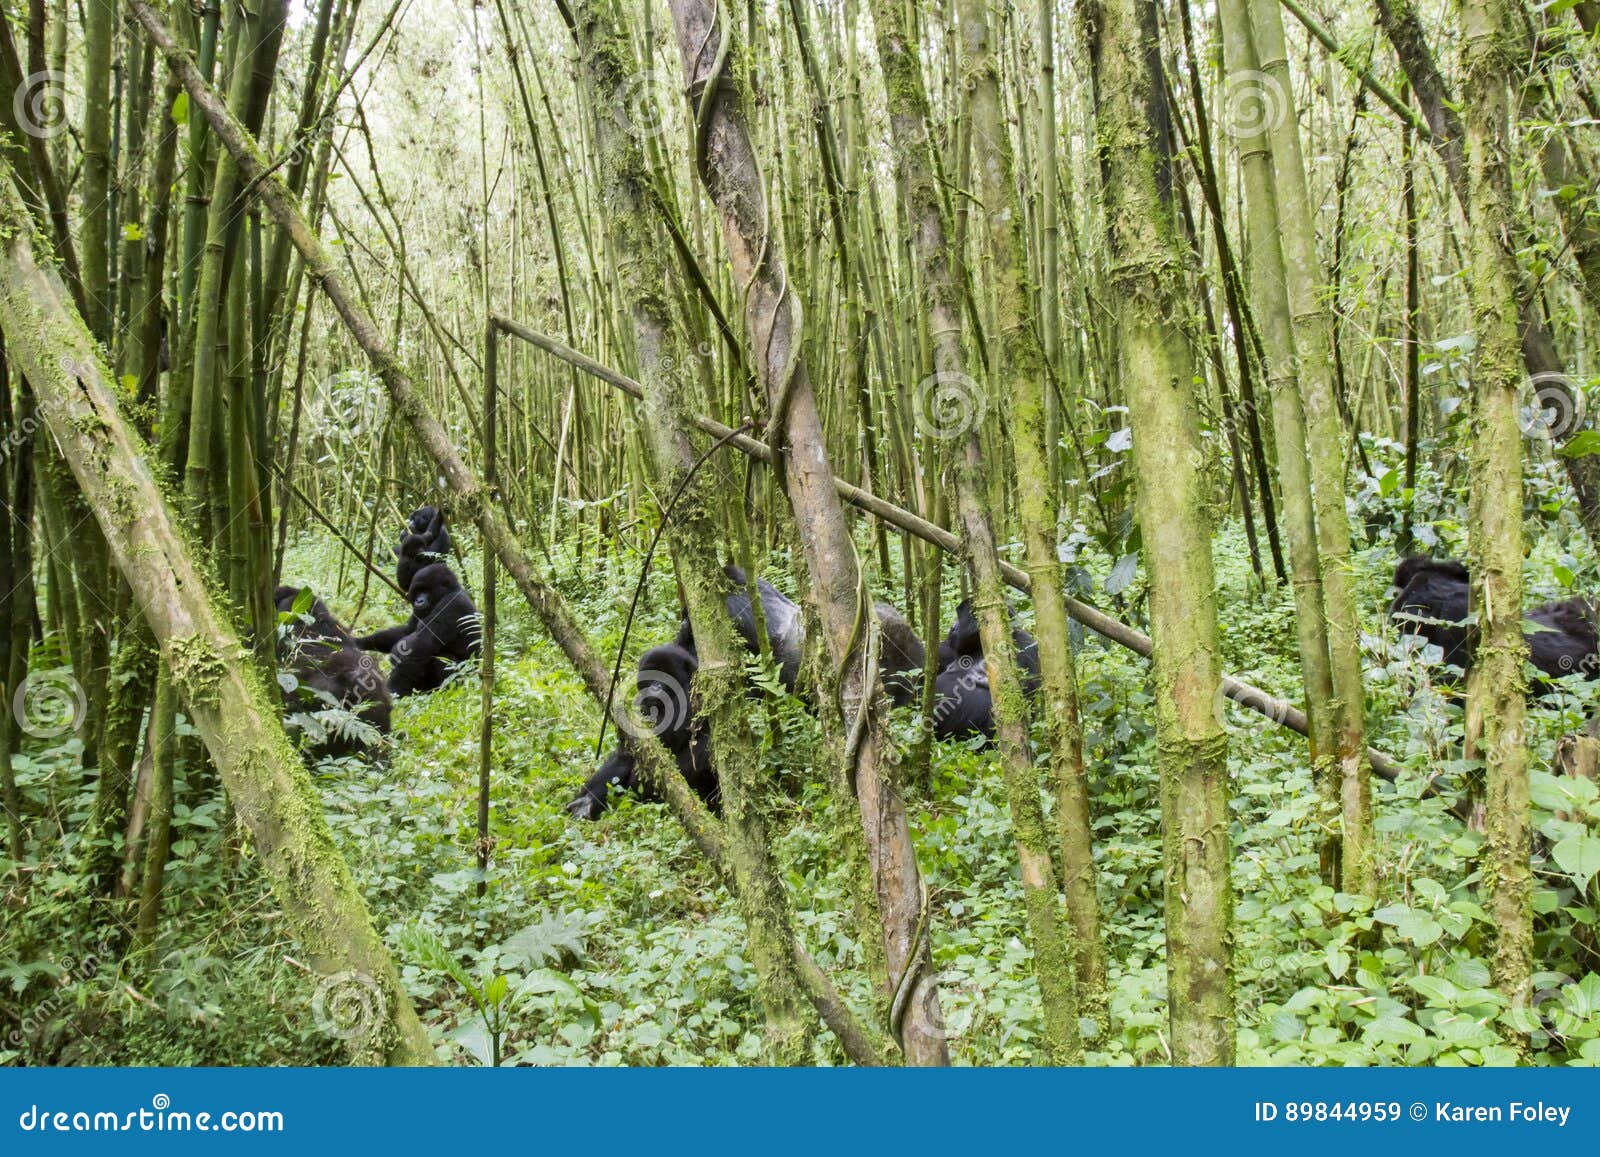 mountain gorilla group in volcanoes national park, virunga, rwanda